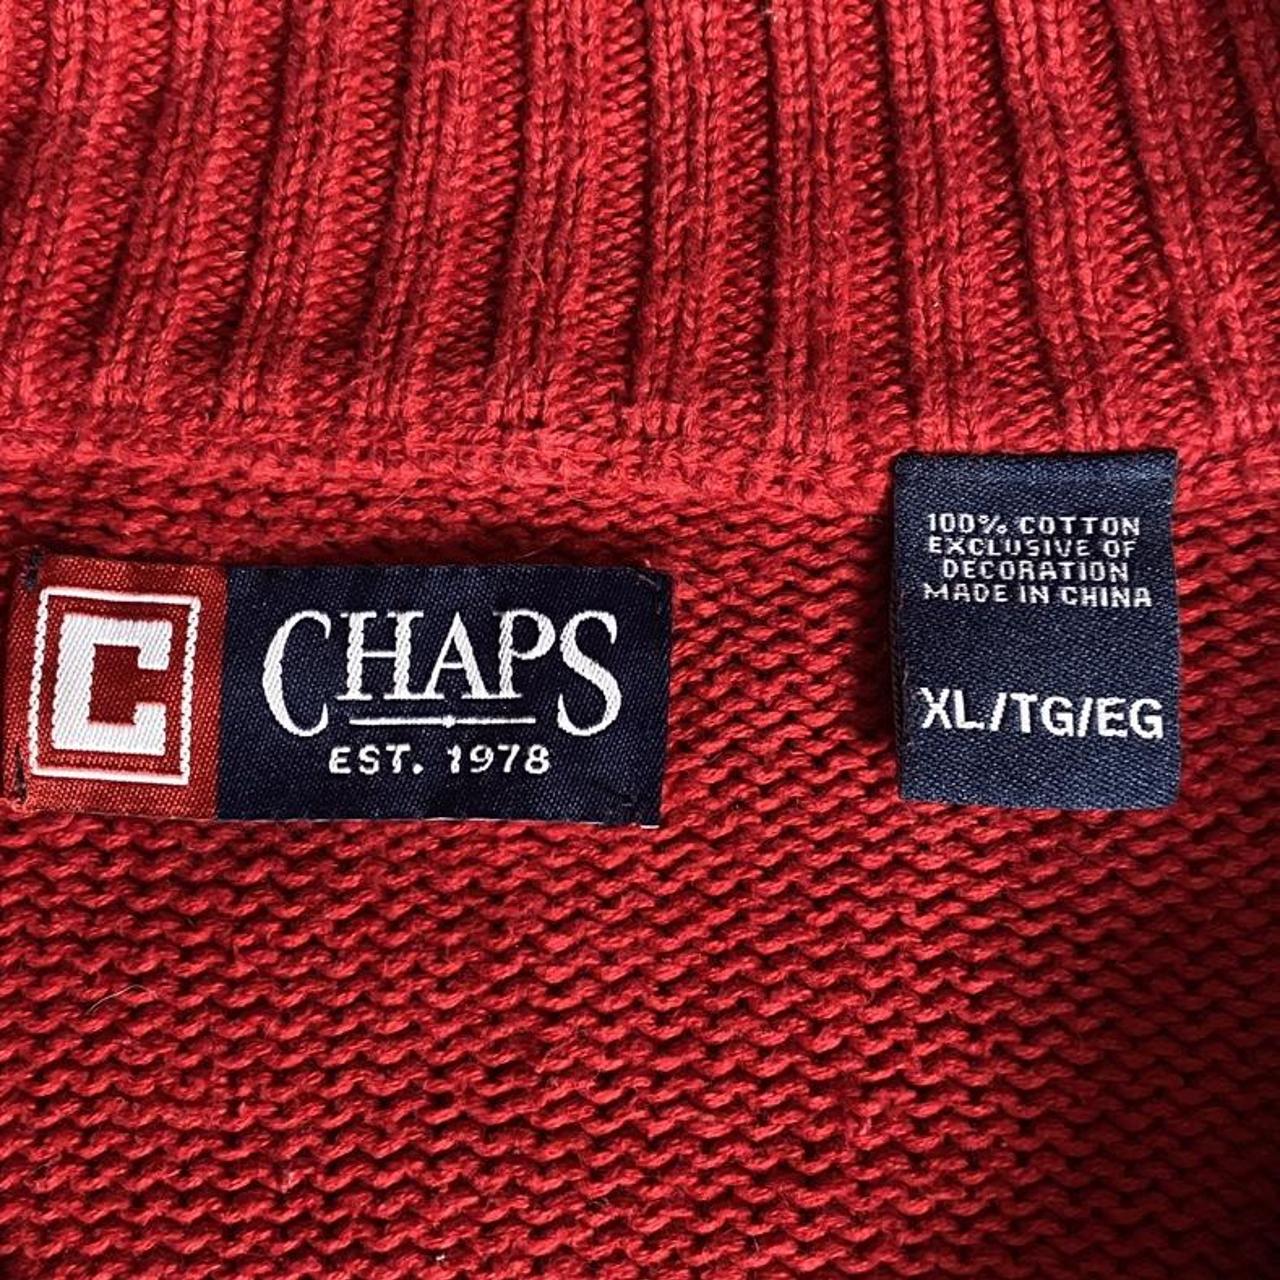 Chaps Knit sweater jumper Chaps red 1/4 zip knit... - Depop